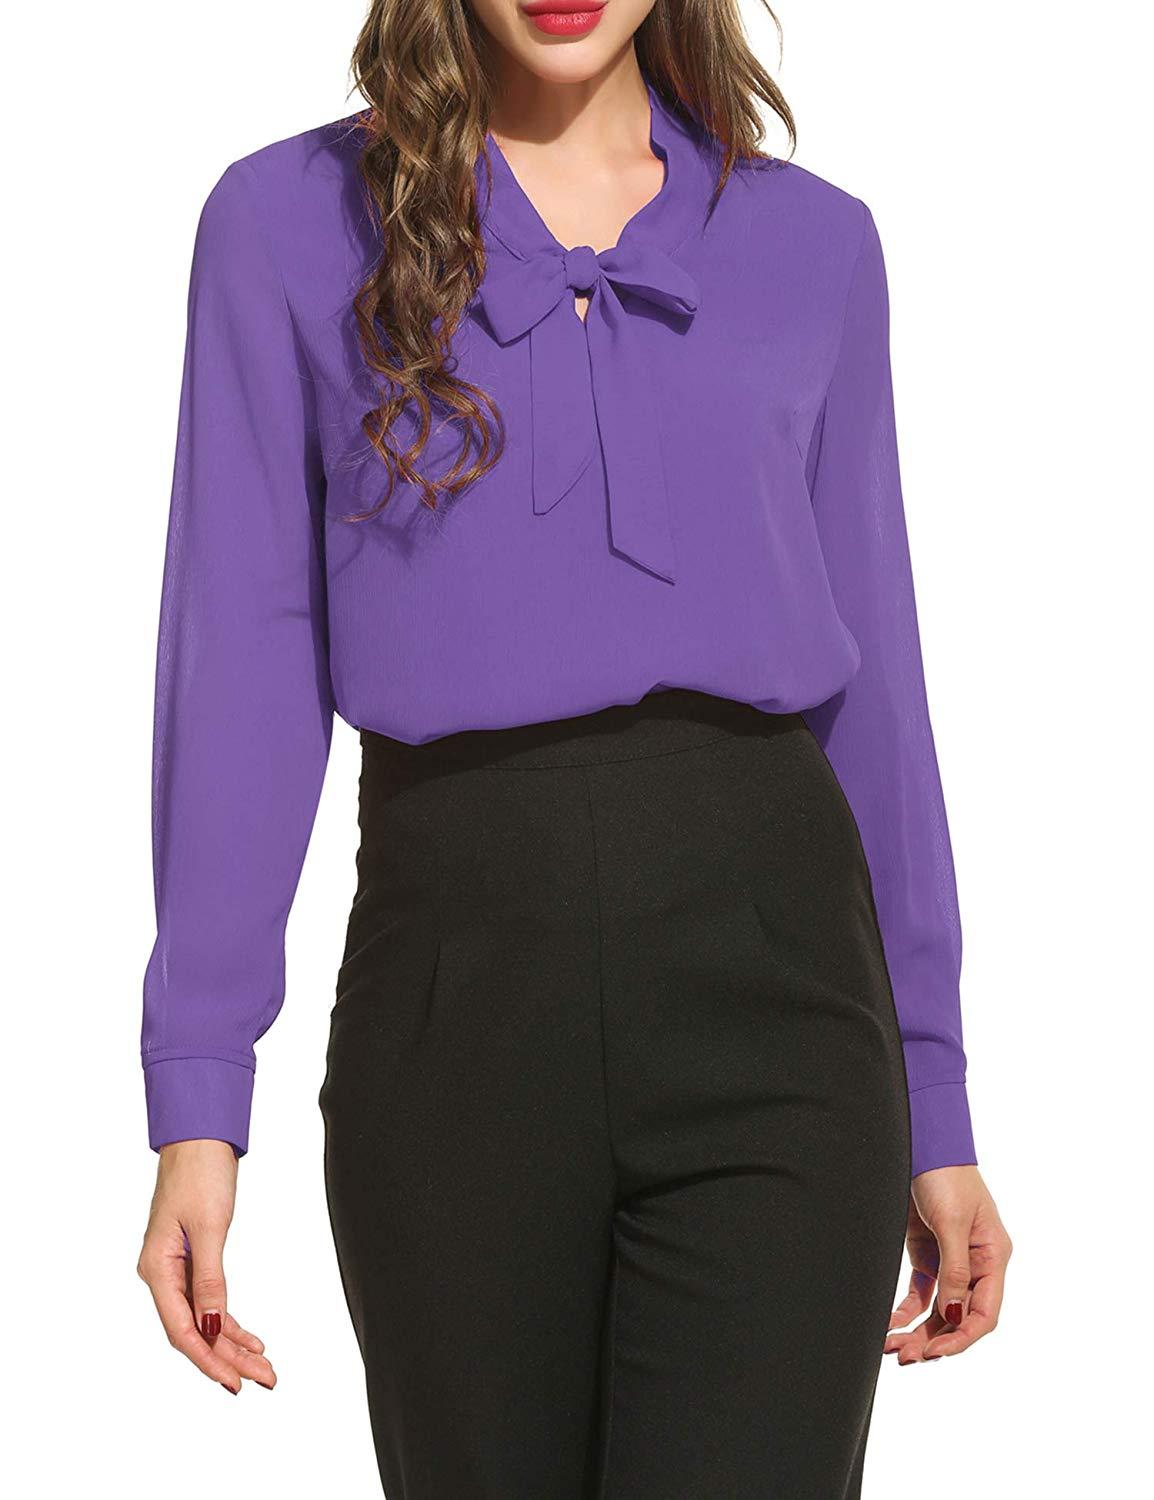 SHYPT Shirt Women Long Sleeve AutumnElegant Purple Formal Chiffon Blouses  Office Ladies Casual Work Tops (Color : Purple, Size : M code) price in UAE,  UAE